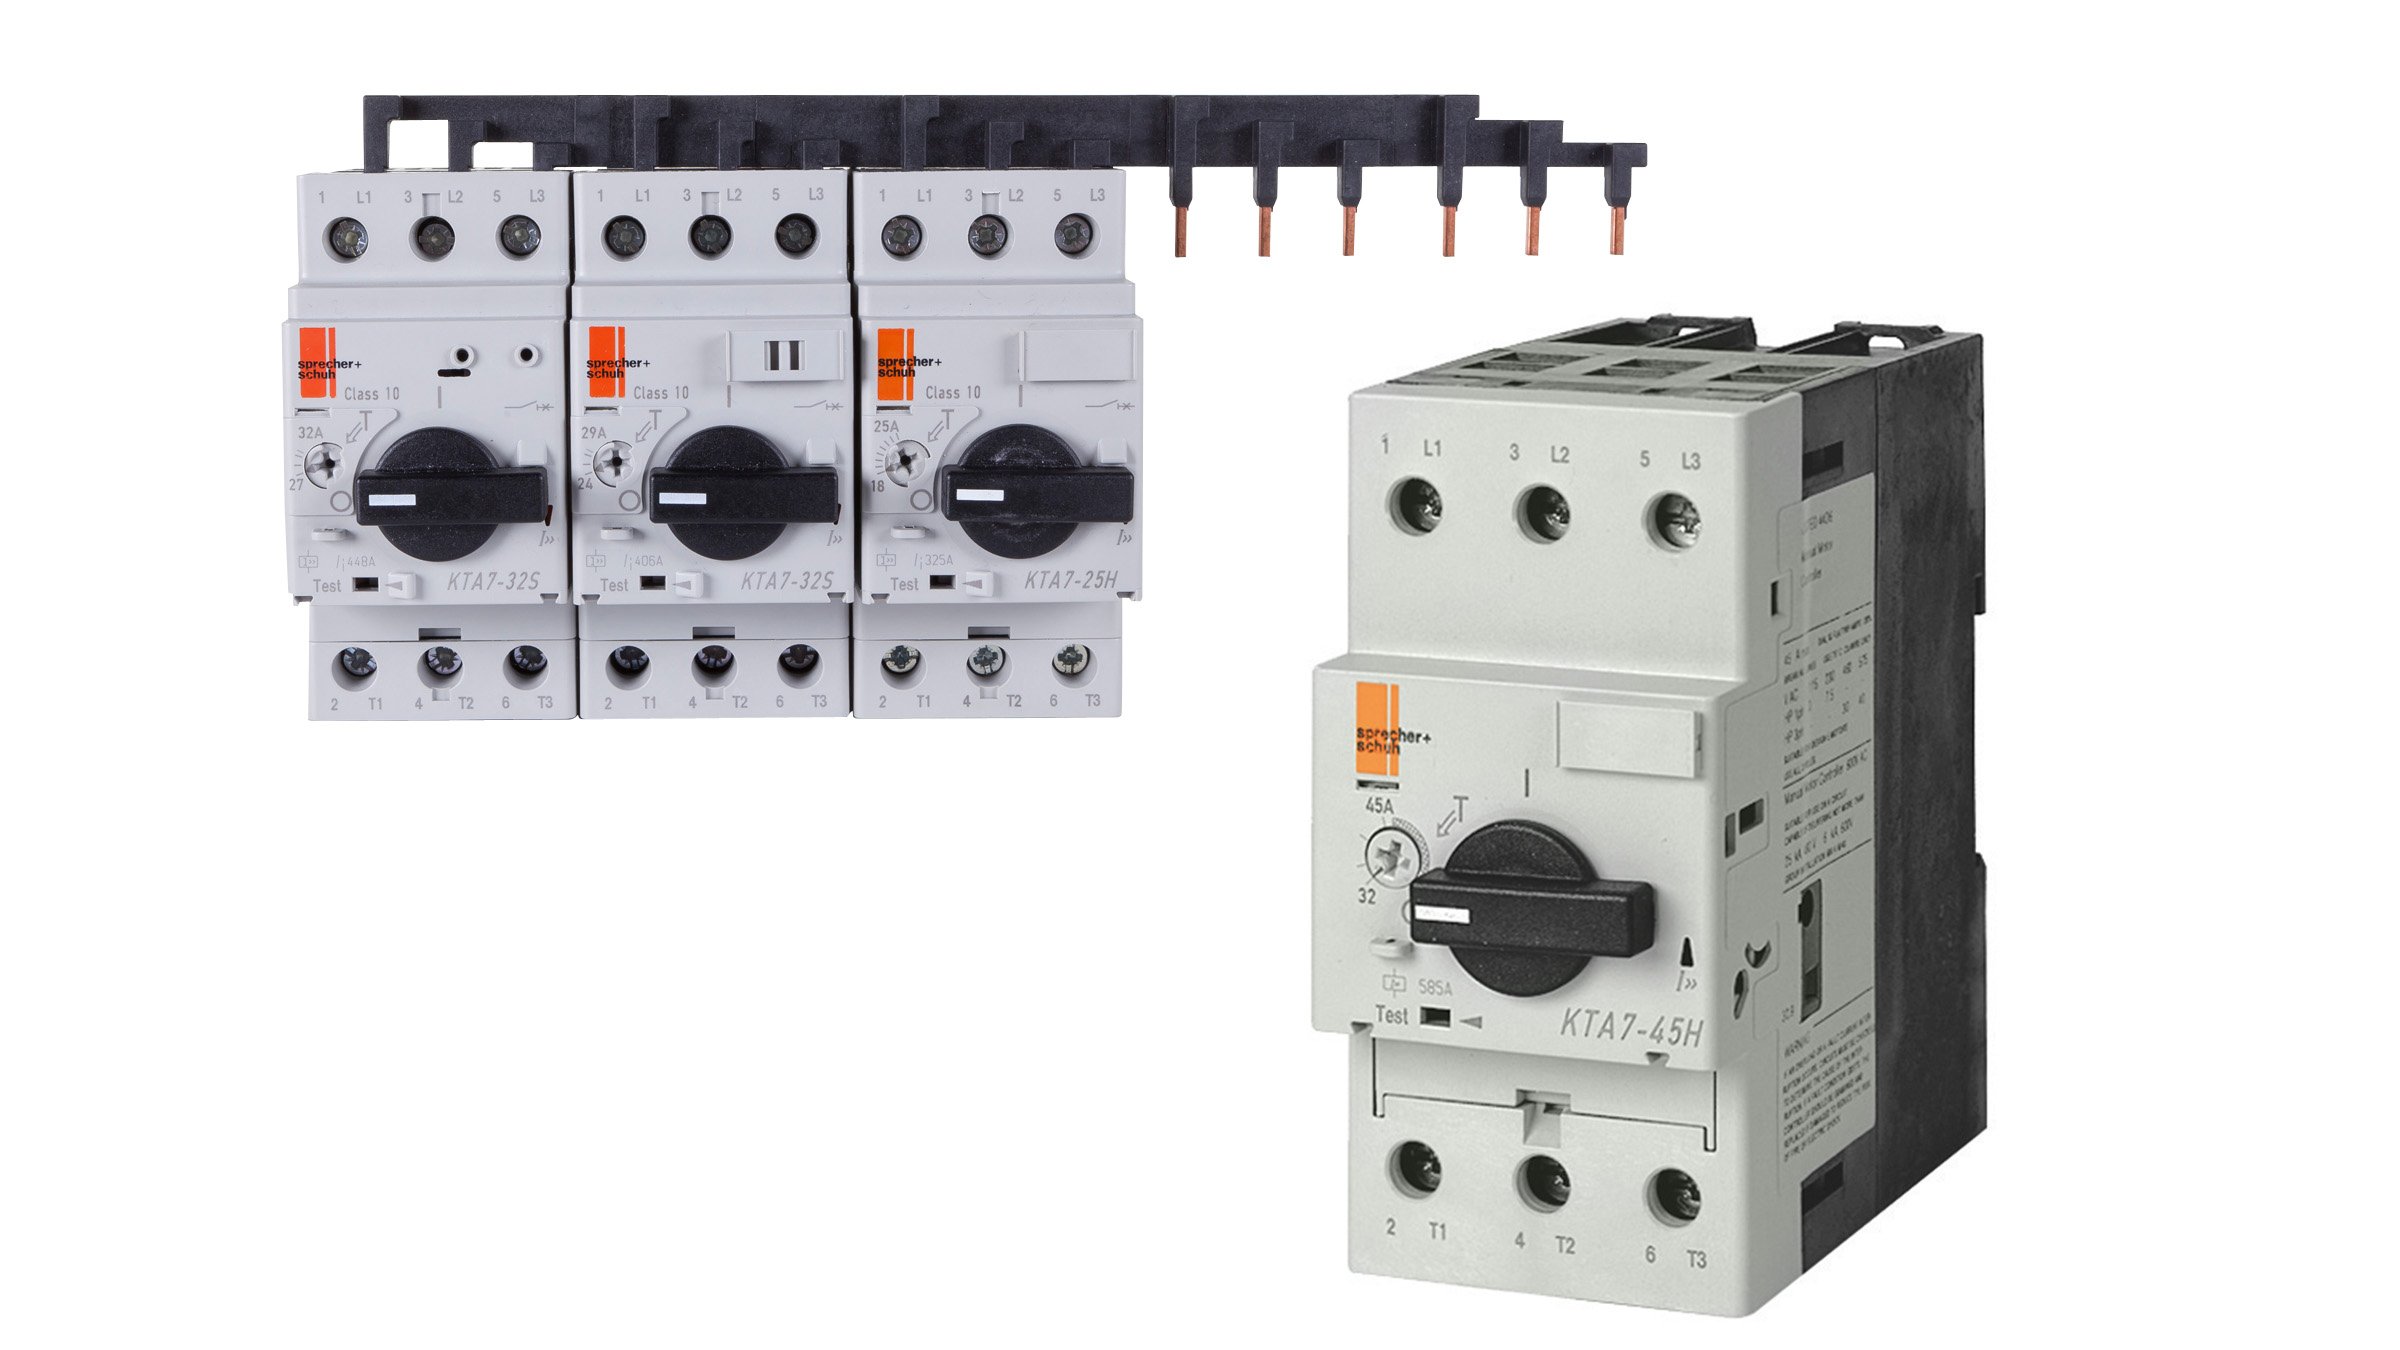 Sprecher & Schuh Series KT7 motor controllers assembled together using a busbar